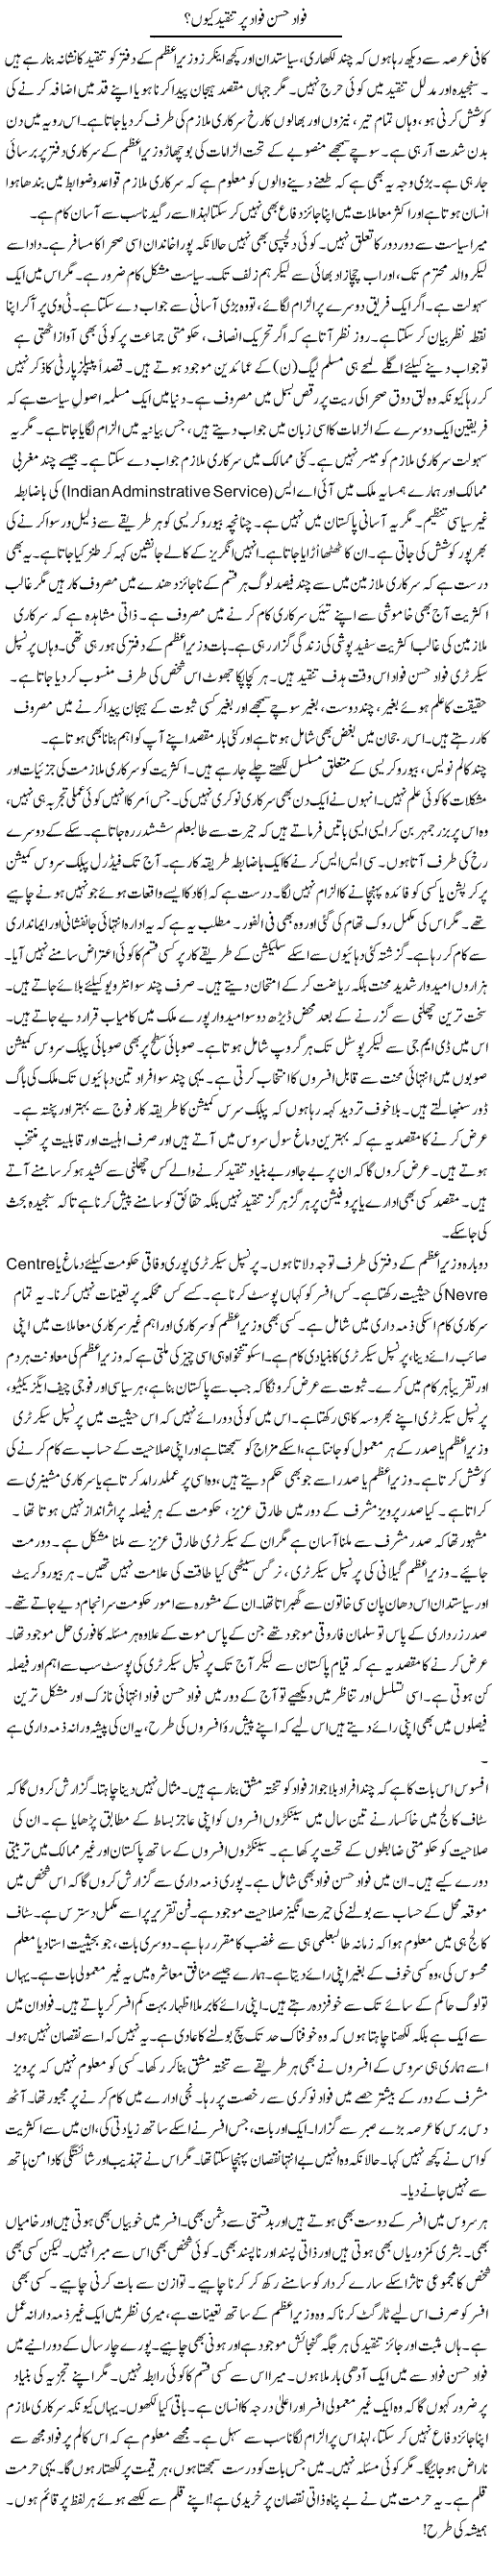 Fawad Hasan Fawad Par Tanqeed Kyun? | Rao Manzar Hayat | Daily Urdu Columns